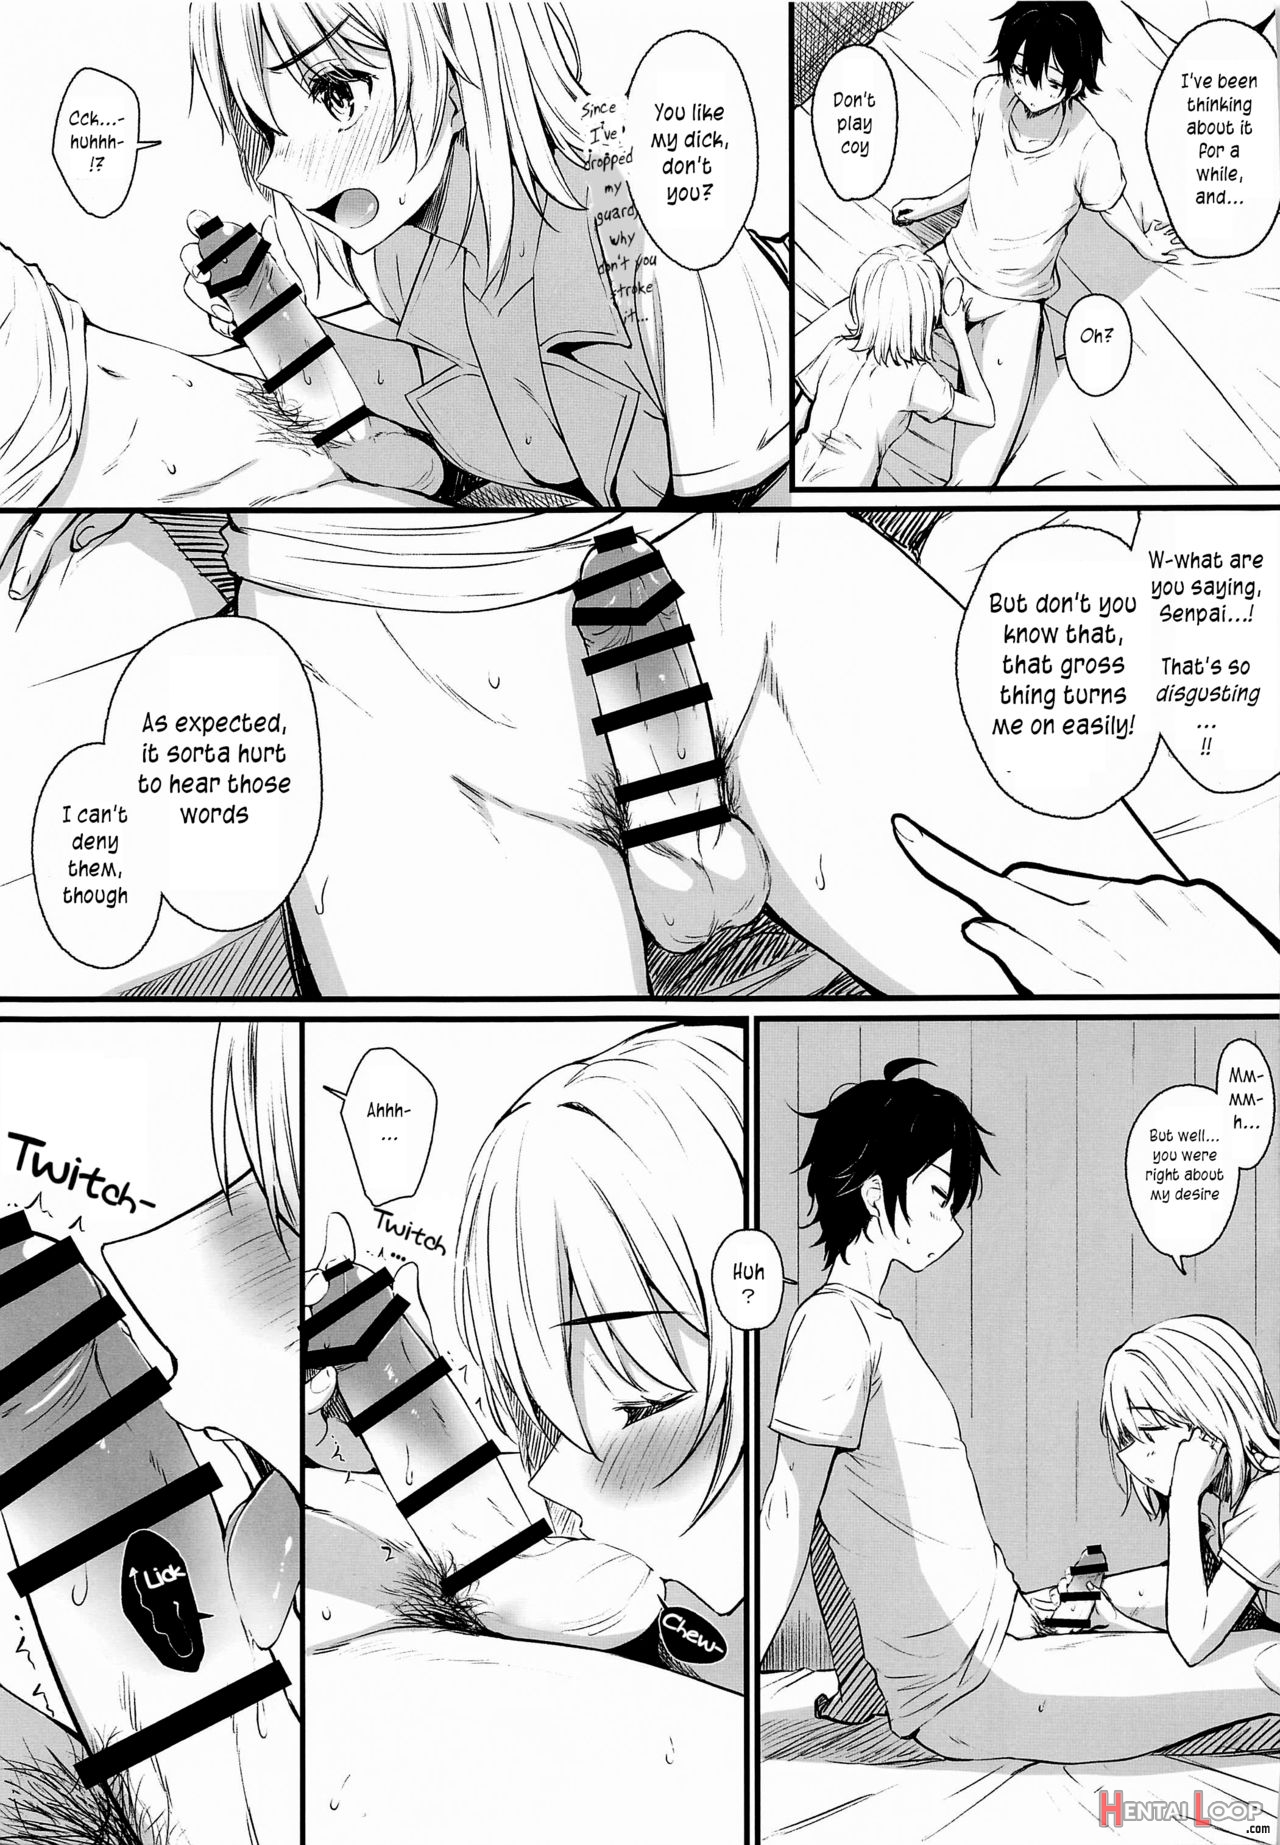 Iroha's Strike page 22